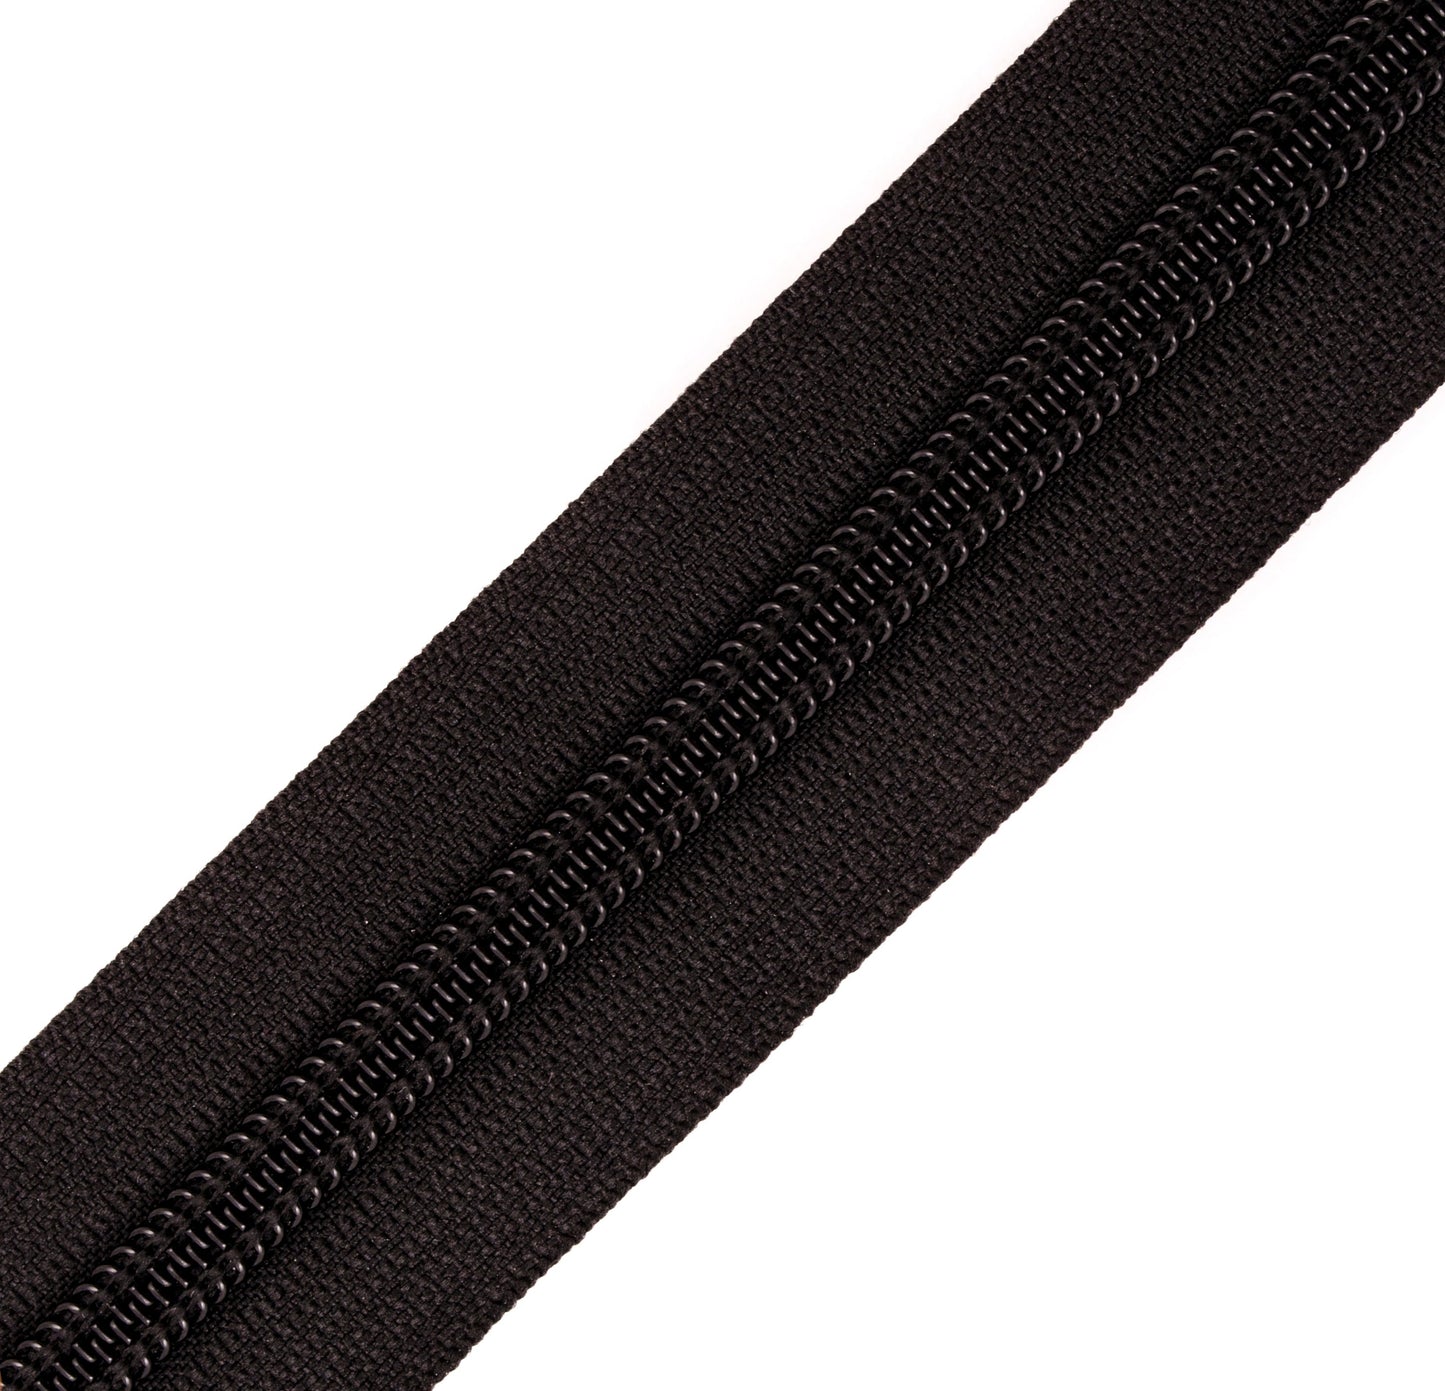 Coil YKK zipper 8RC (580) Black